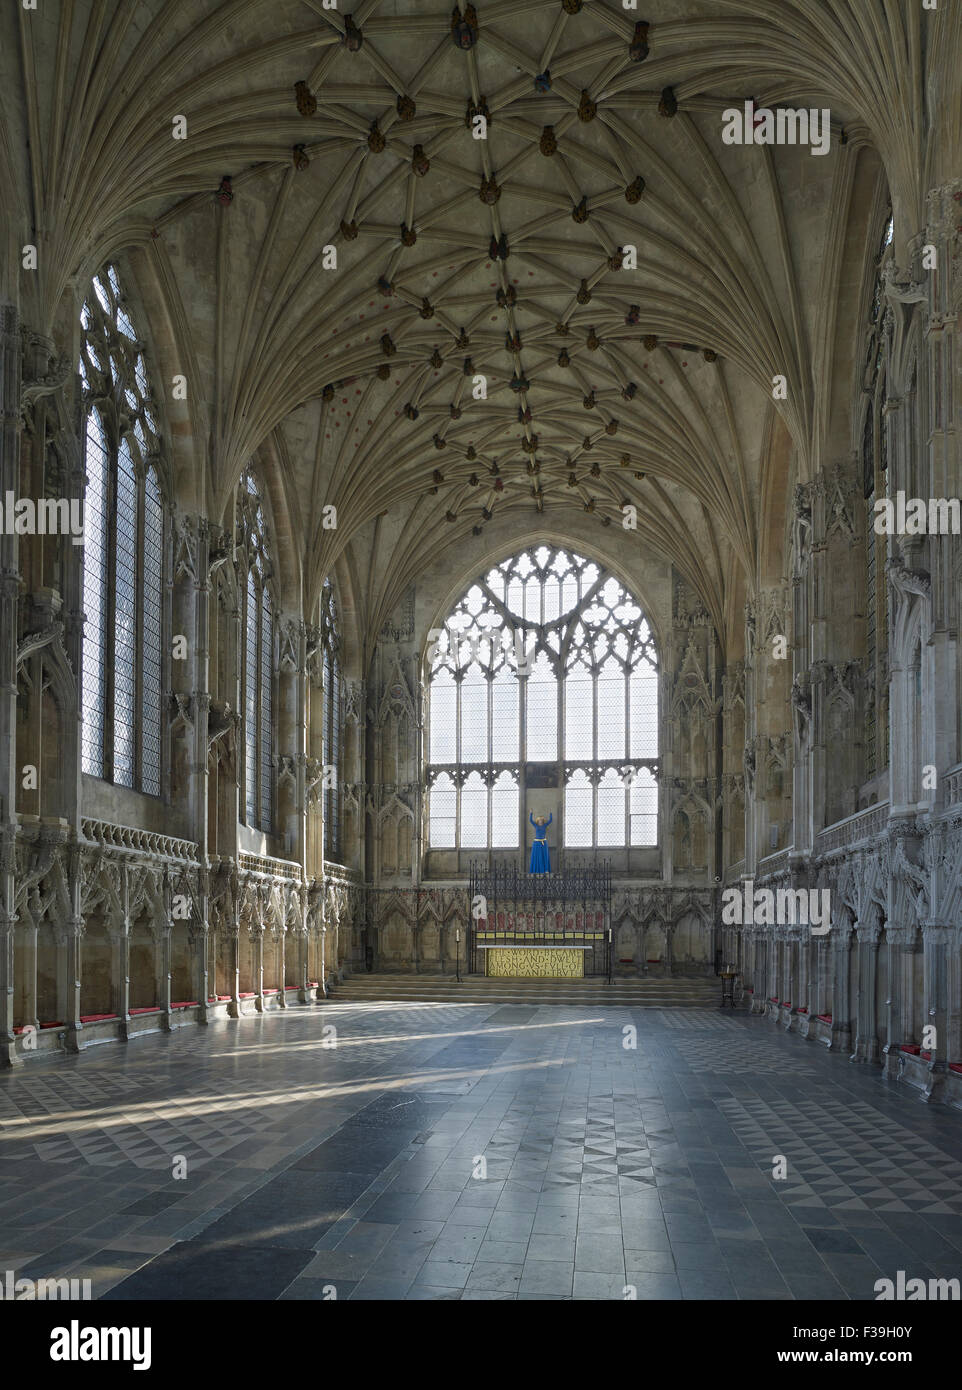 La catedral de Ely Lady Chapel interior Foto de stock